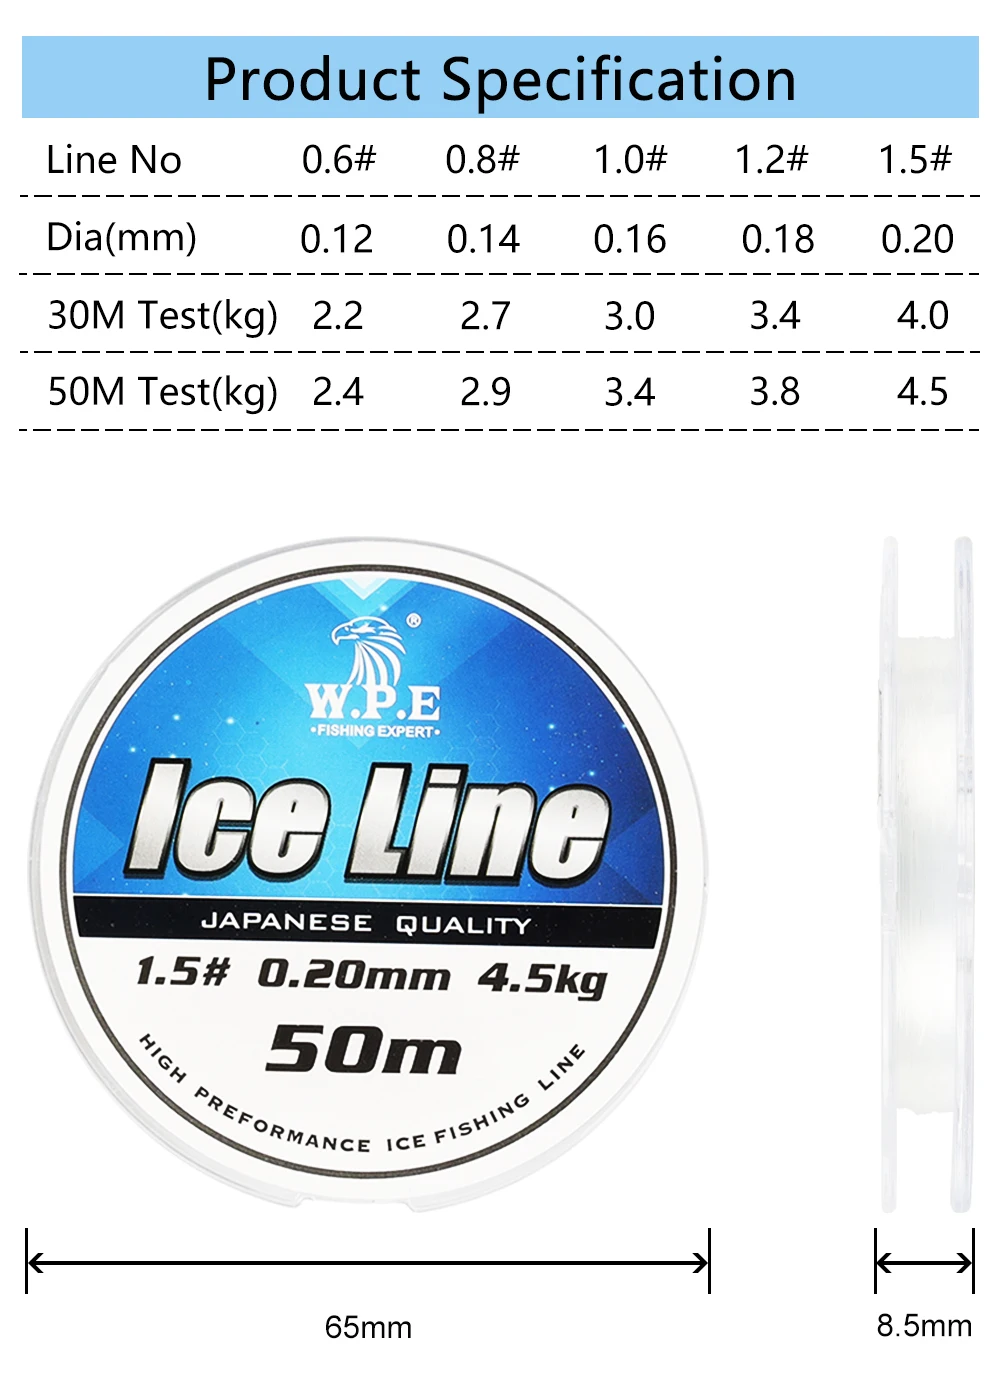 w.p.e ice fishing line 30m/50m nylon